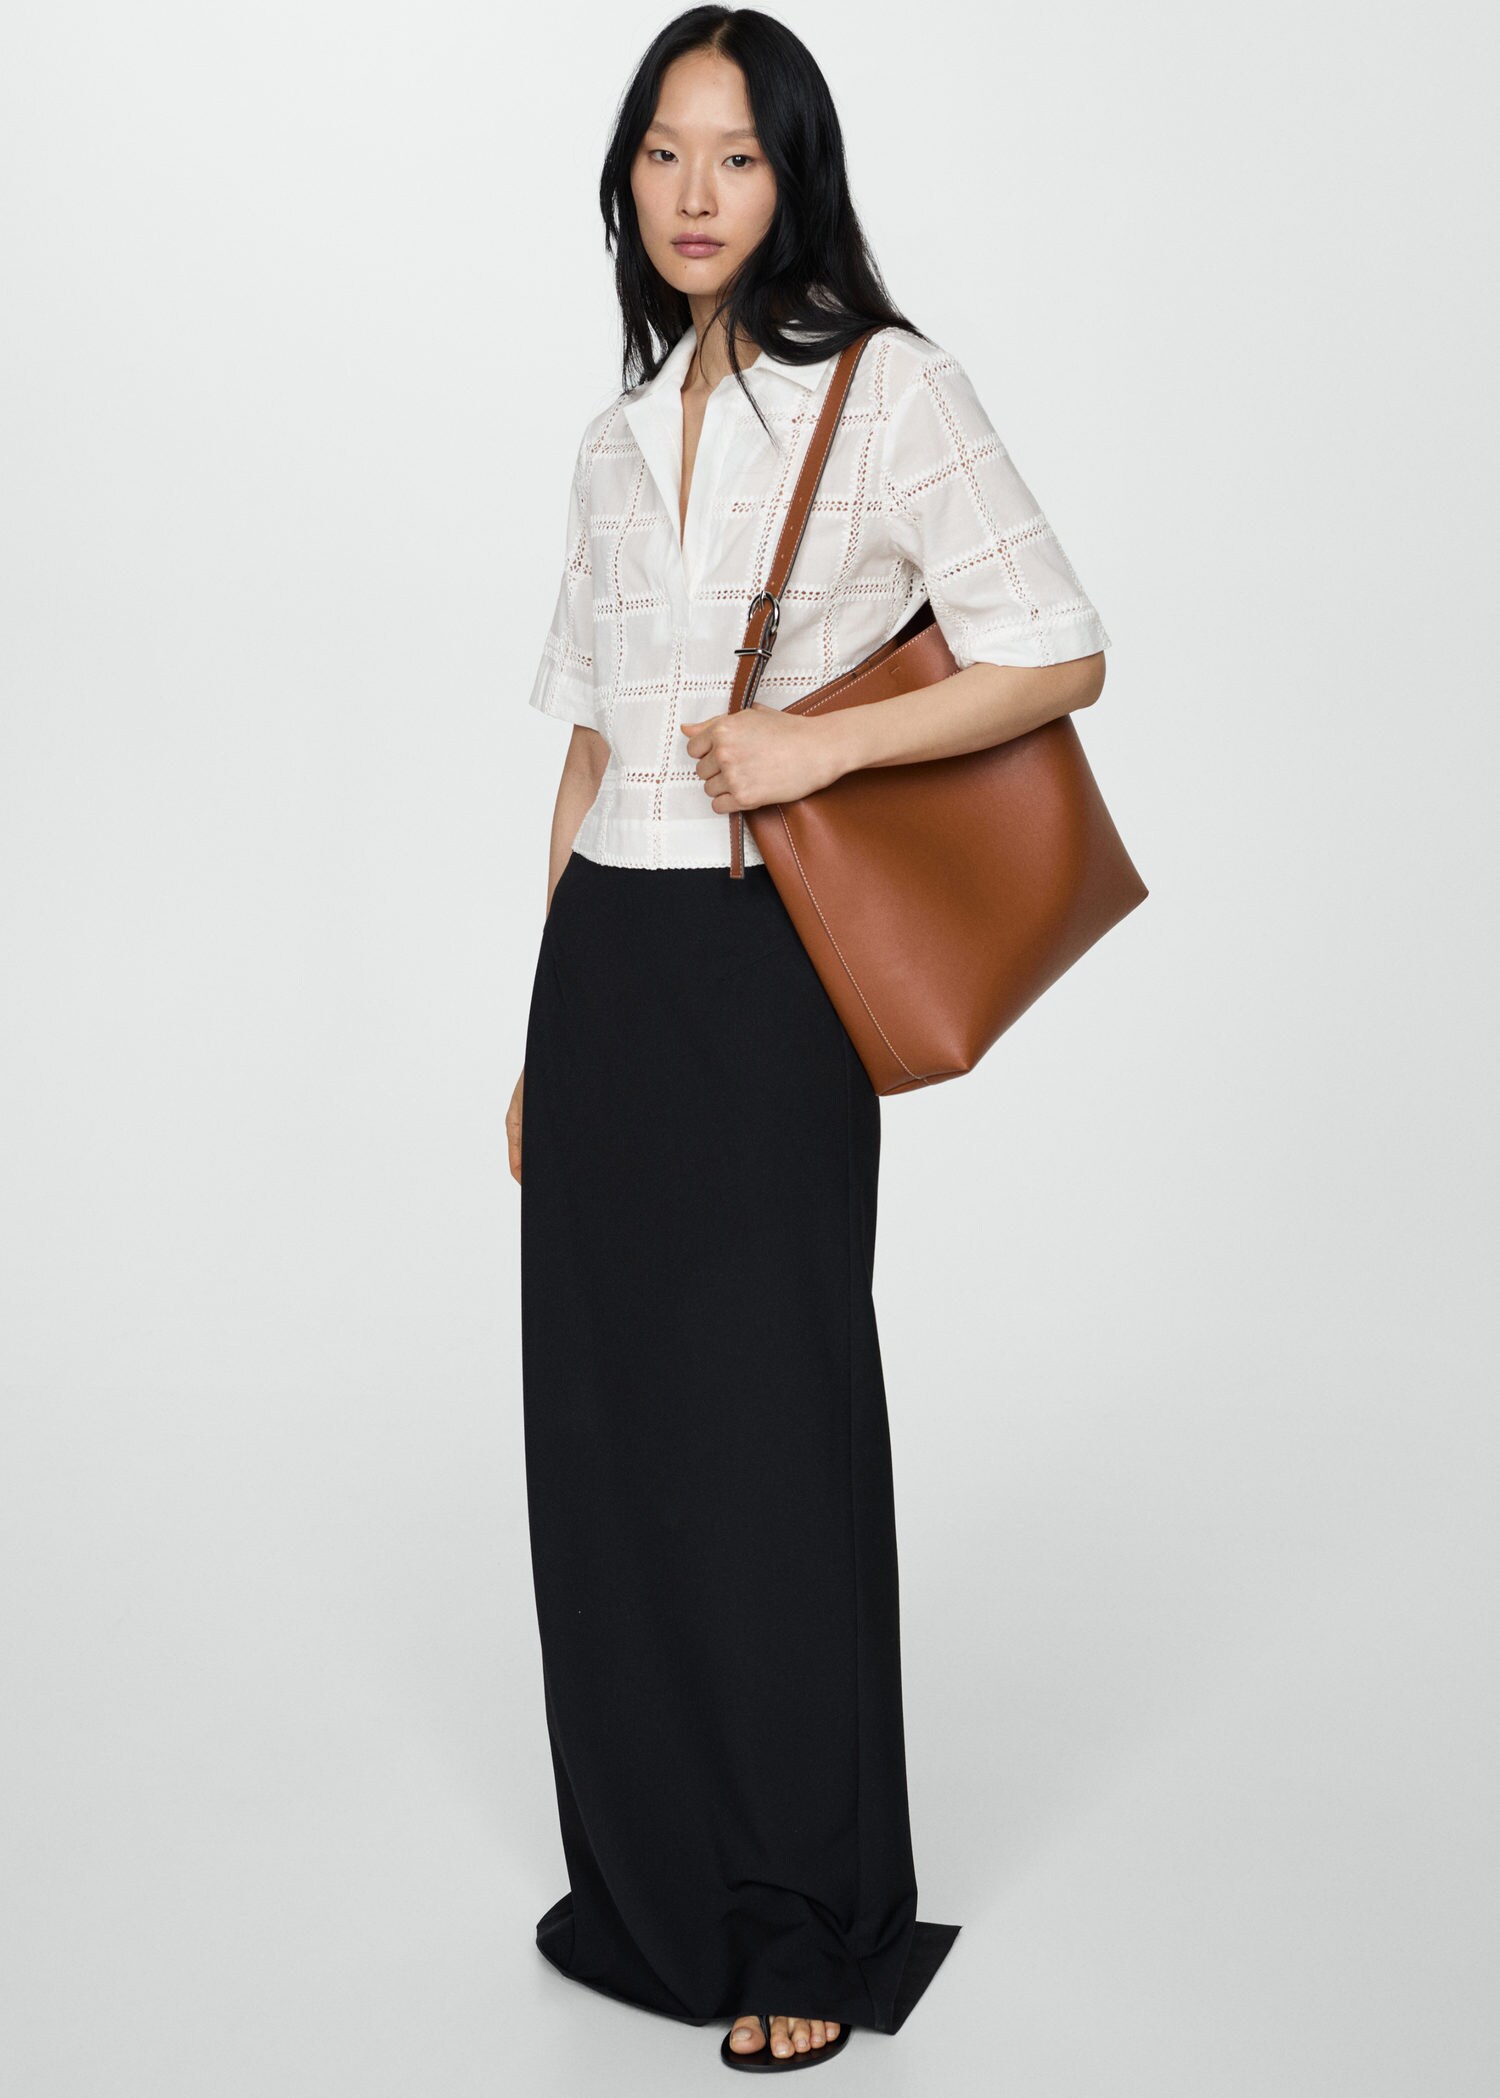 MANGO Bags Designer Brand for Women Handbags Luxury Purses Fashion Shoulder  Crossbody Chain Lock Clamshell Small Versatile bags - AliExpress